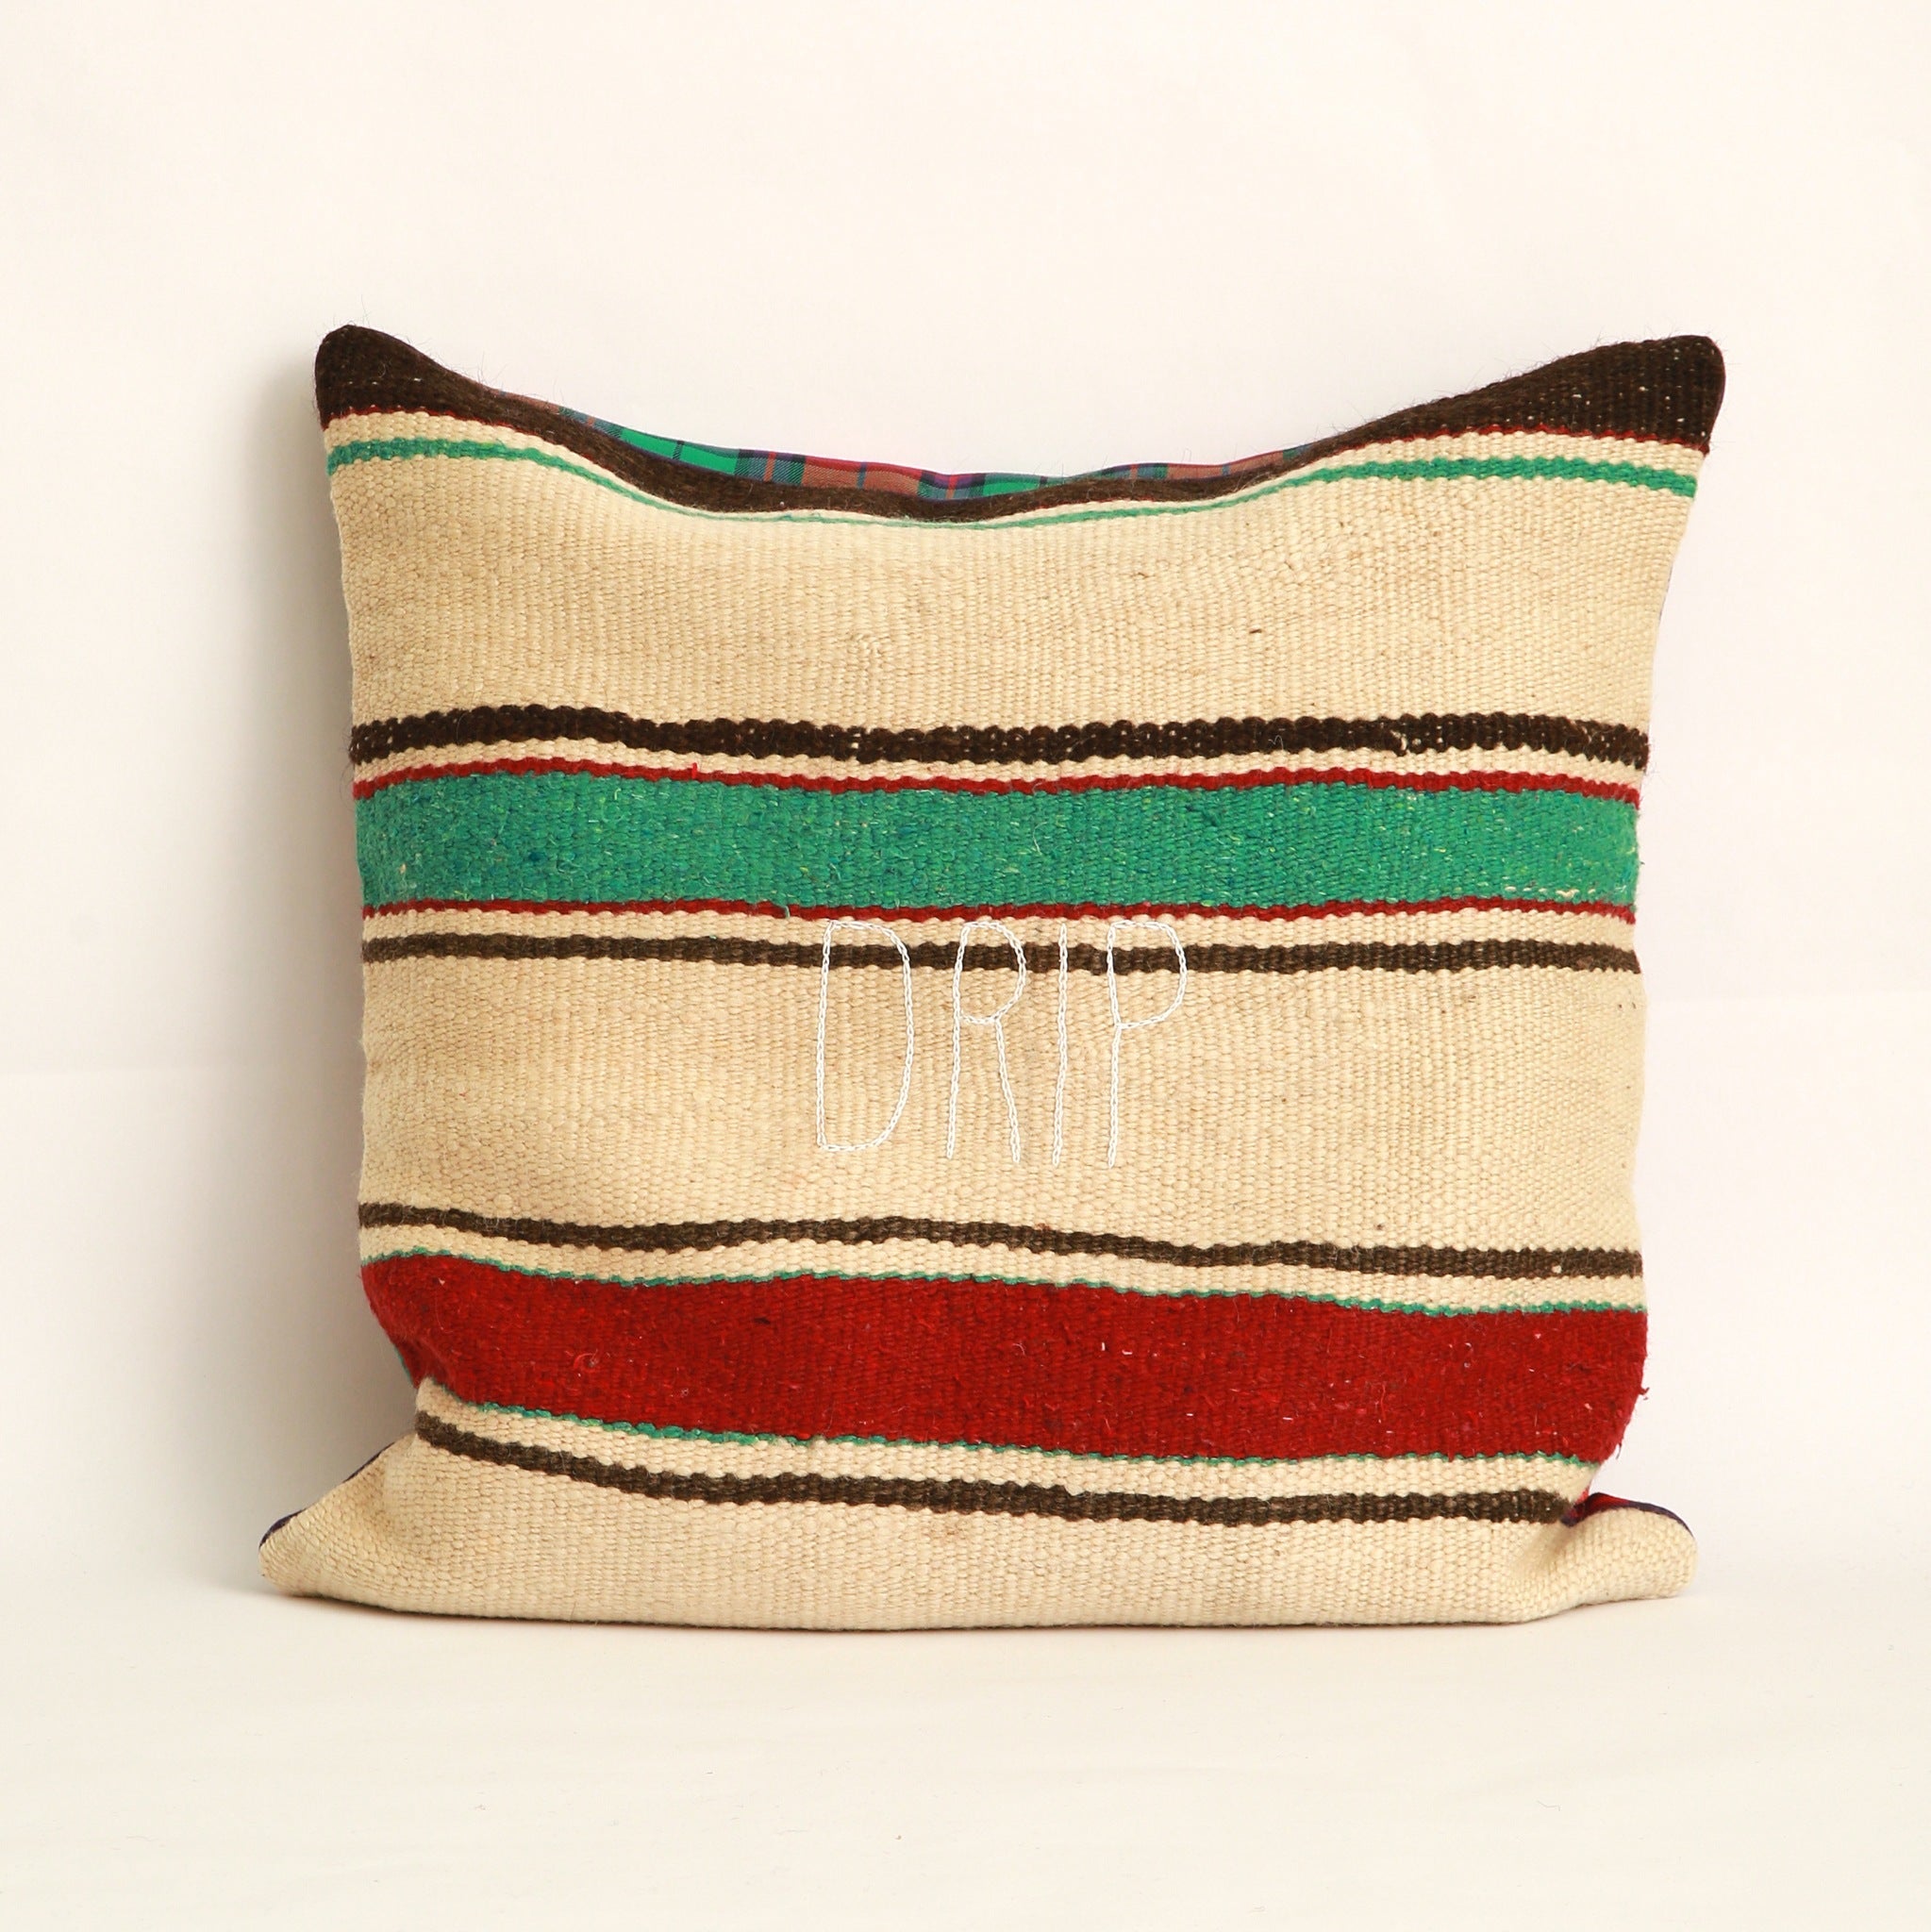 Fodera a righe colorate per cuscino 50x50 cm in lana e cotone